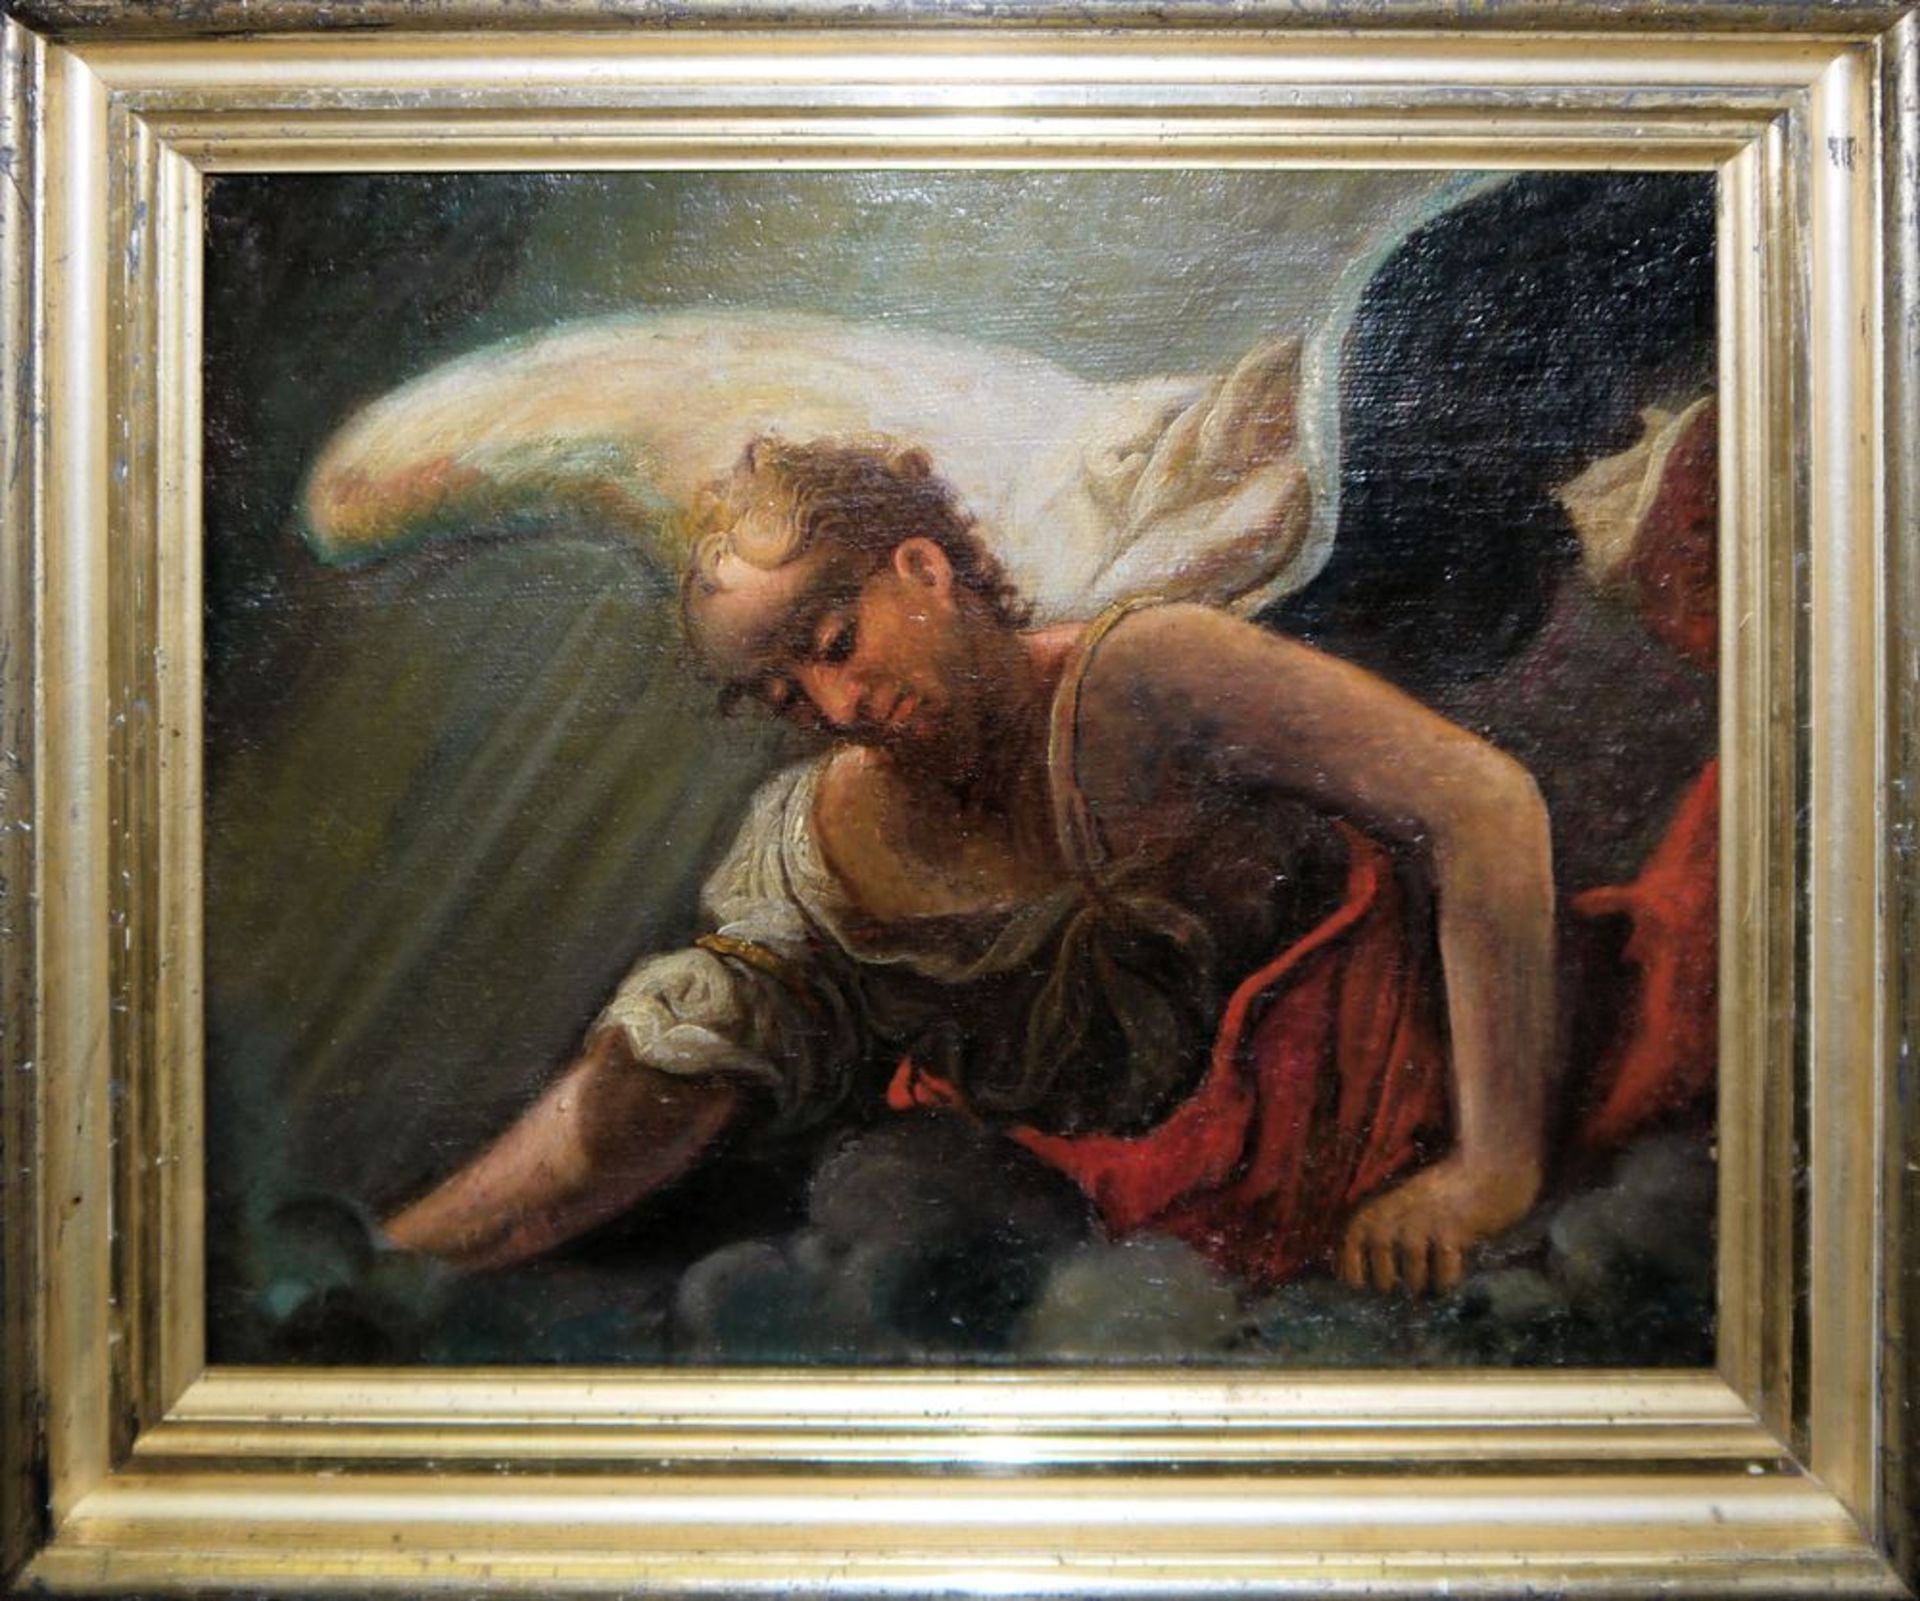 Barock- Maler 17. Jh., Engel Jehovas, qualitätvoller Ausschnitt aus einem größe